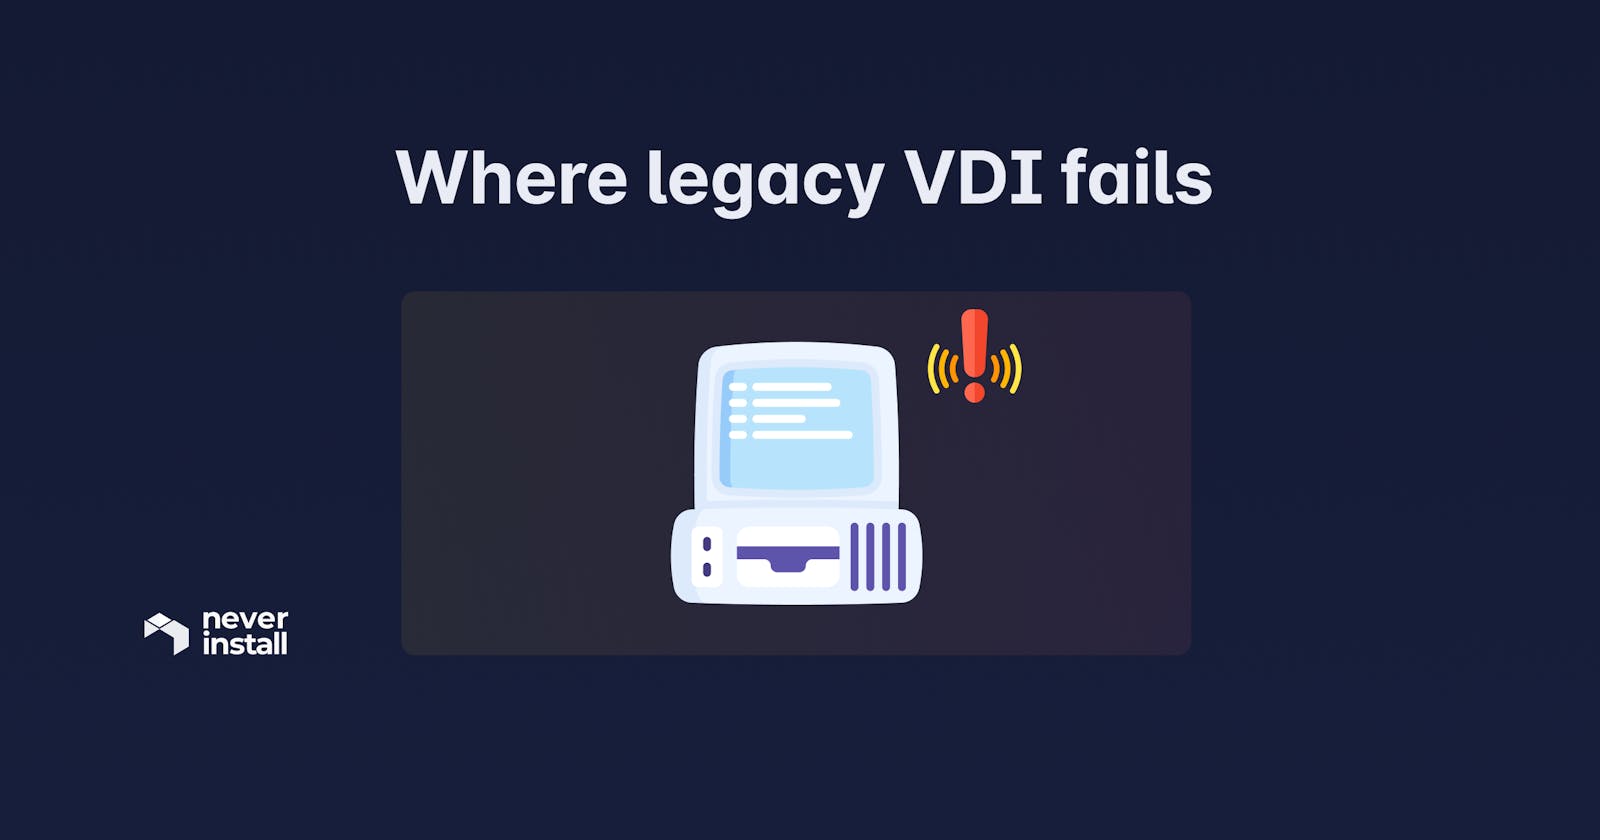 Where legacy VDI fails